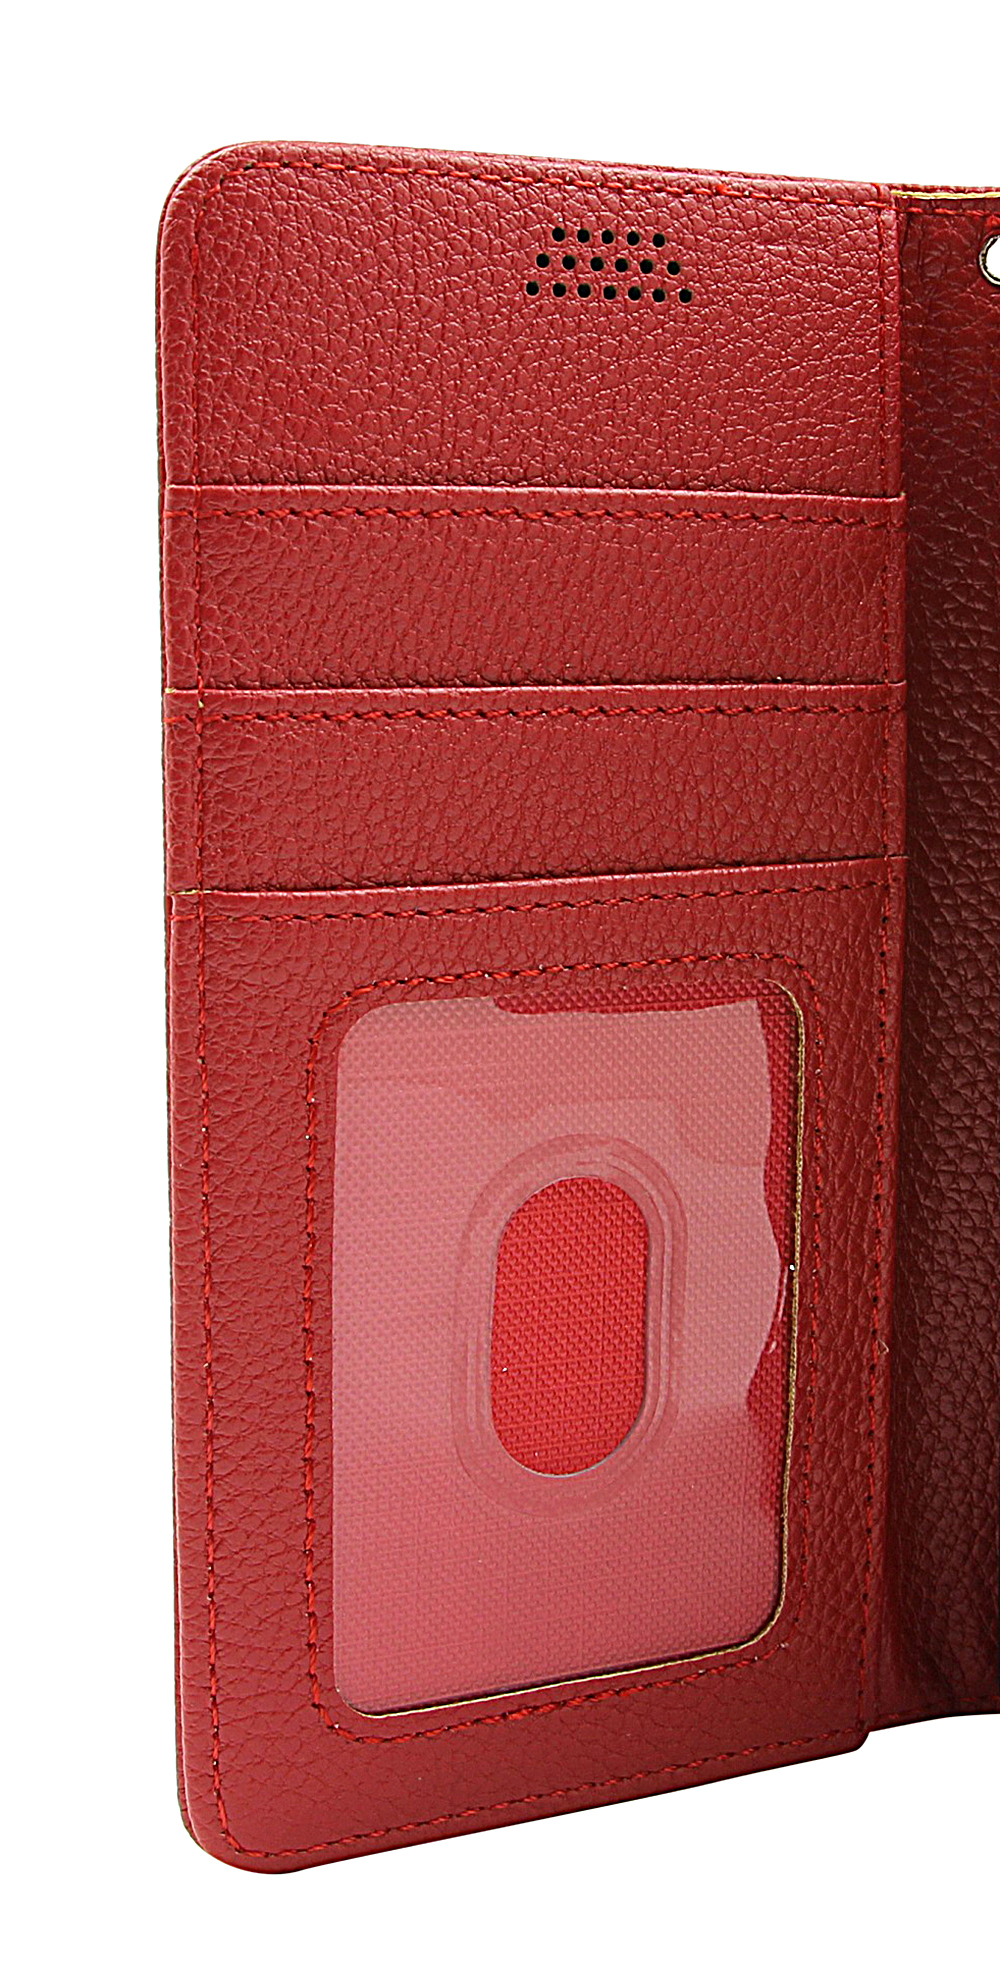 New Standcase Wallet Motorola Edge 30